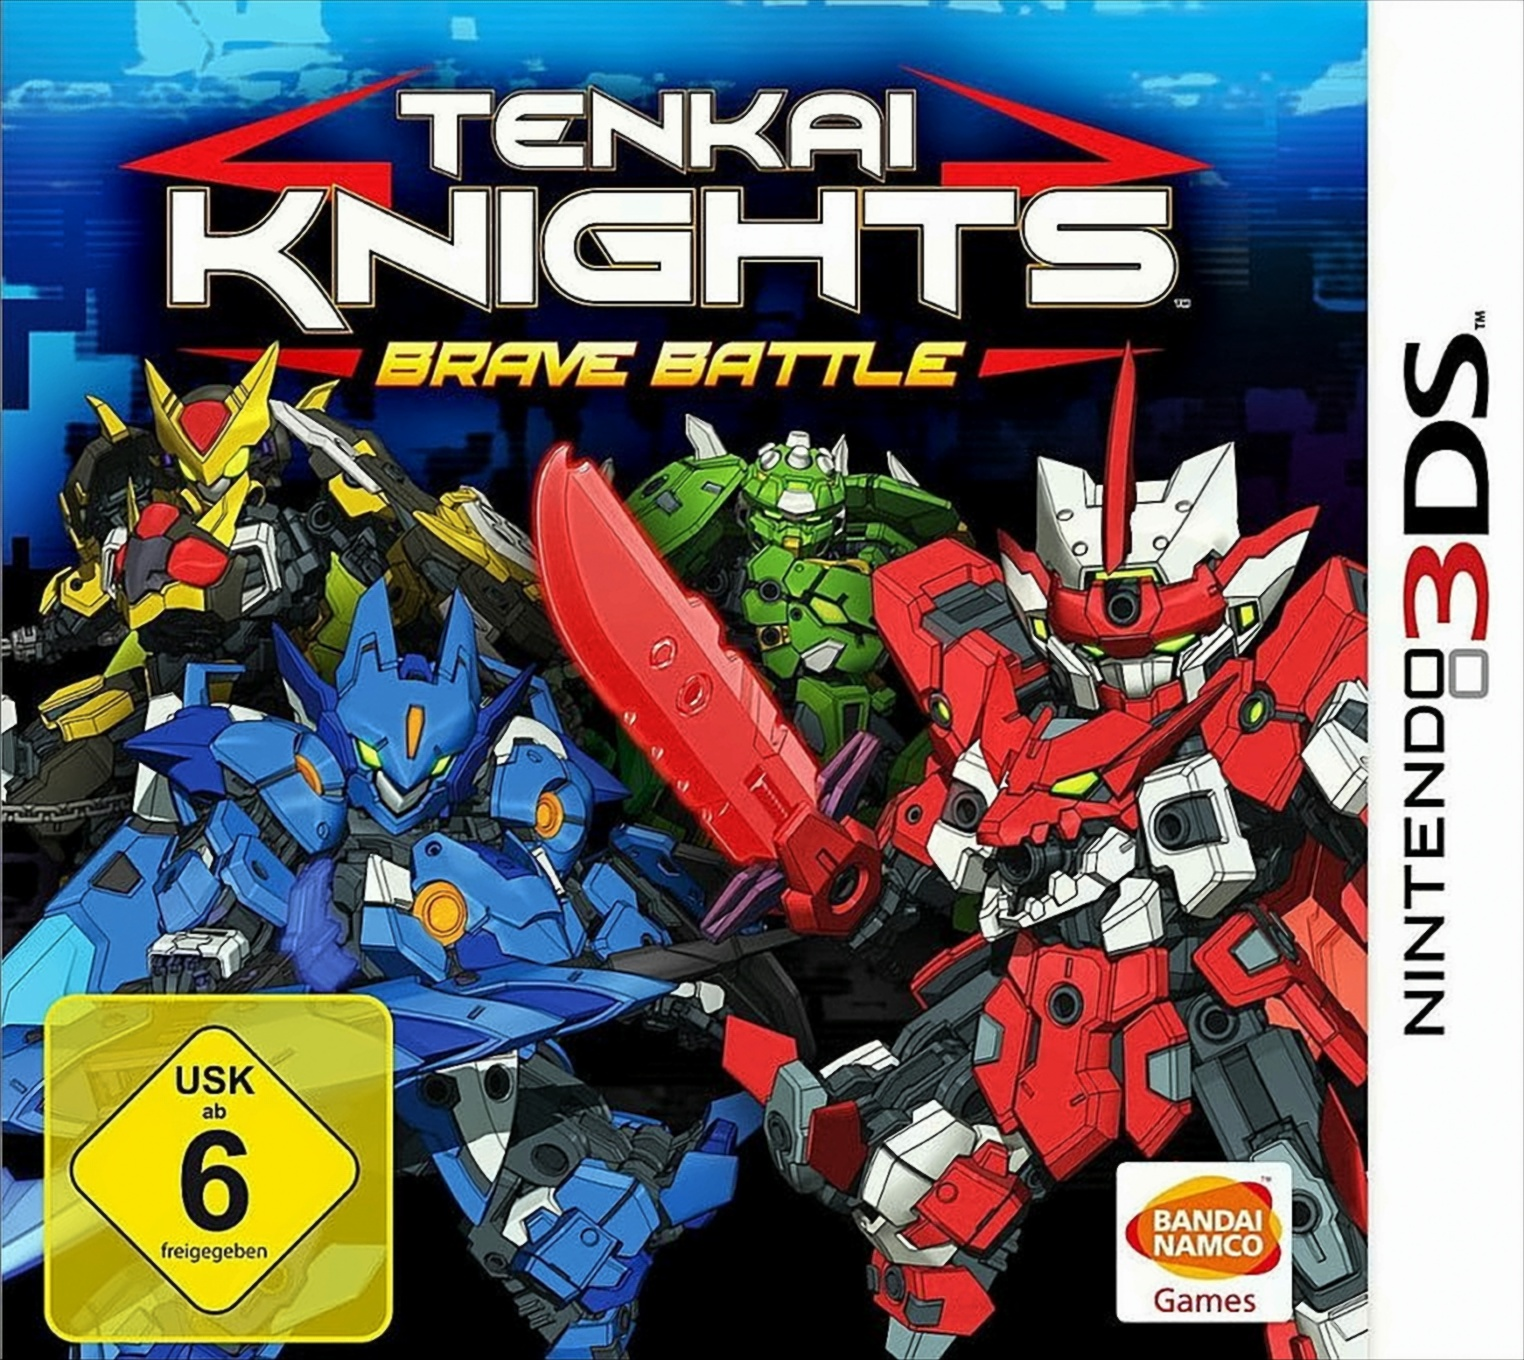 [Nintendo 3DS] Knights: - Battle Brave Tenkai